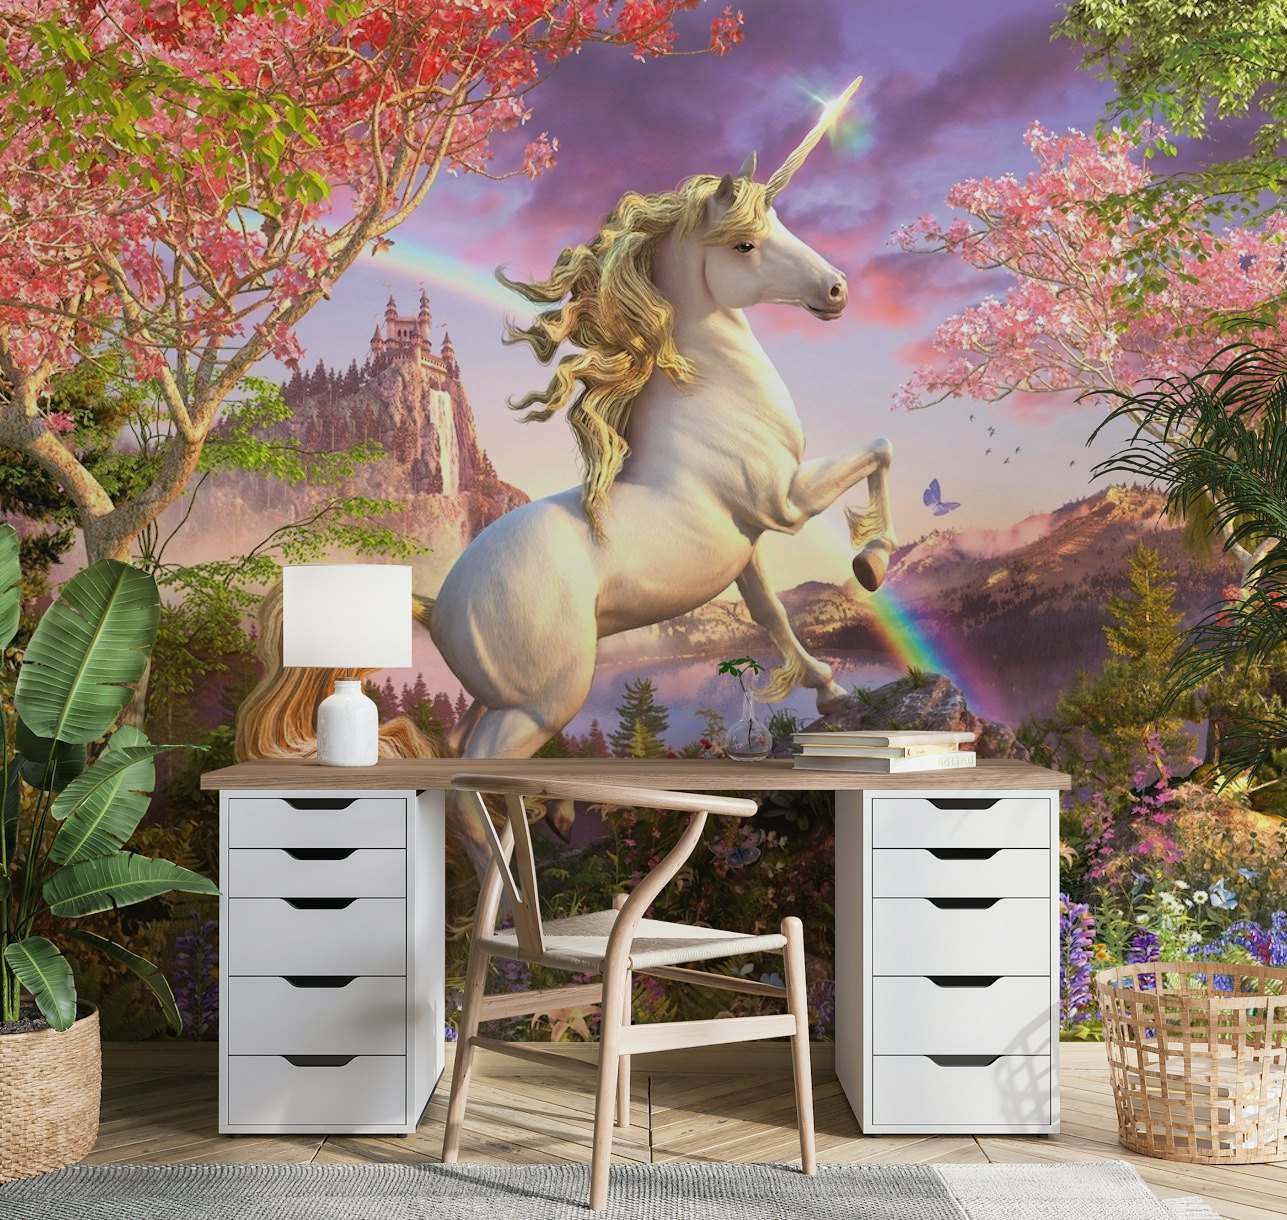 Awesome Unicorn wallpaper